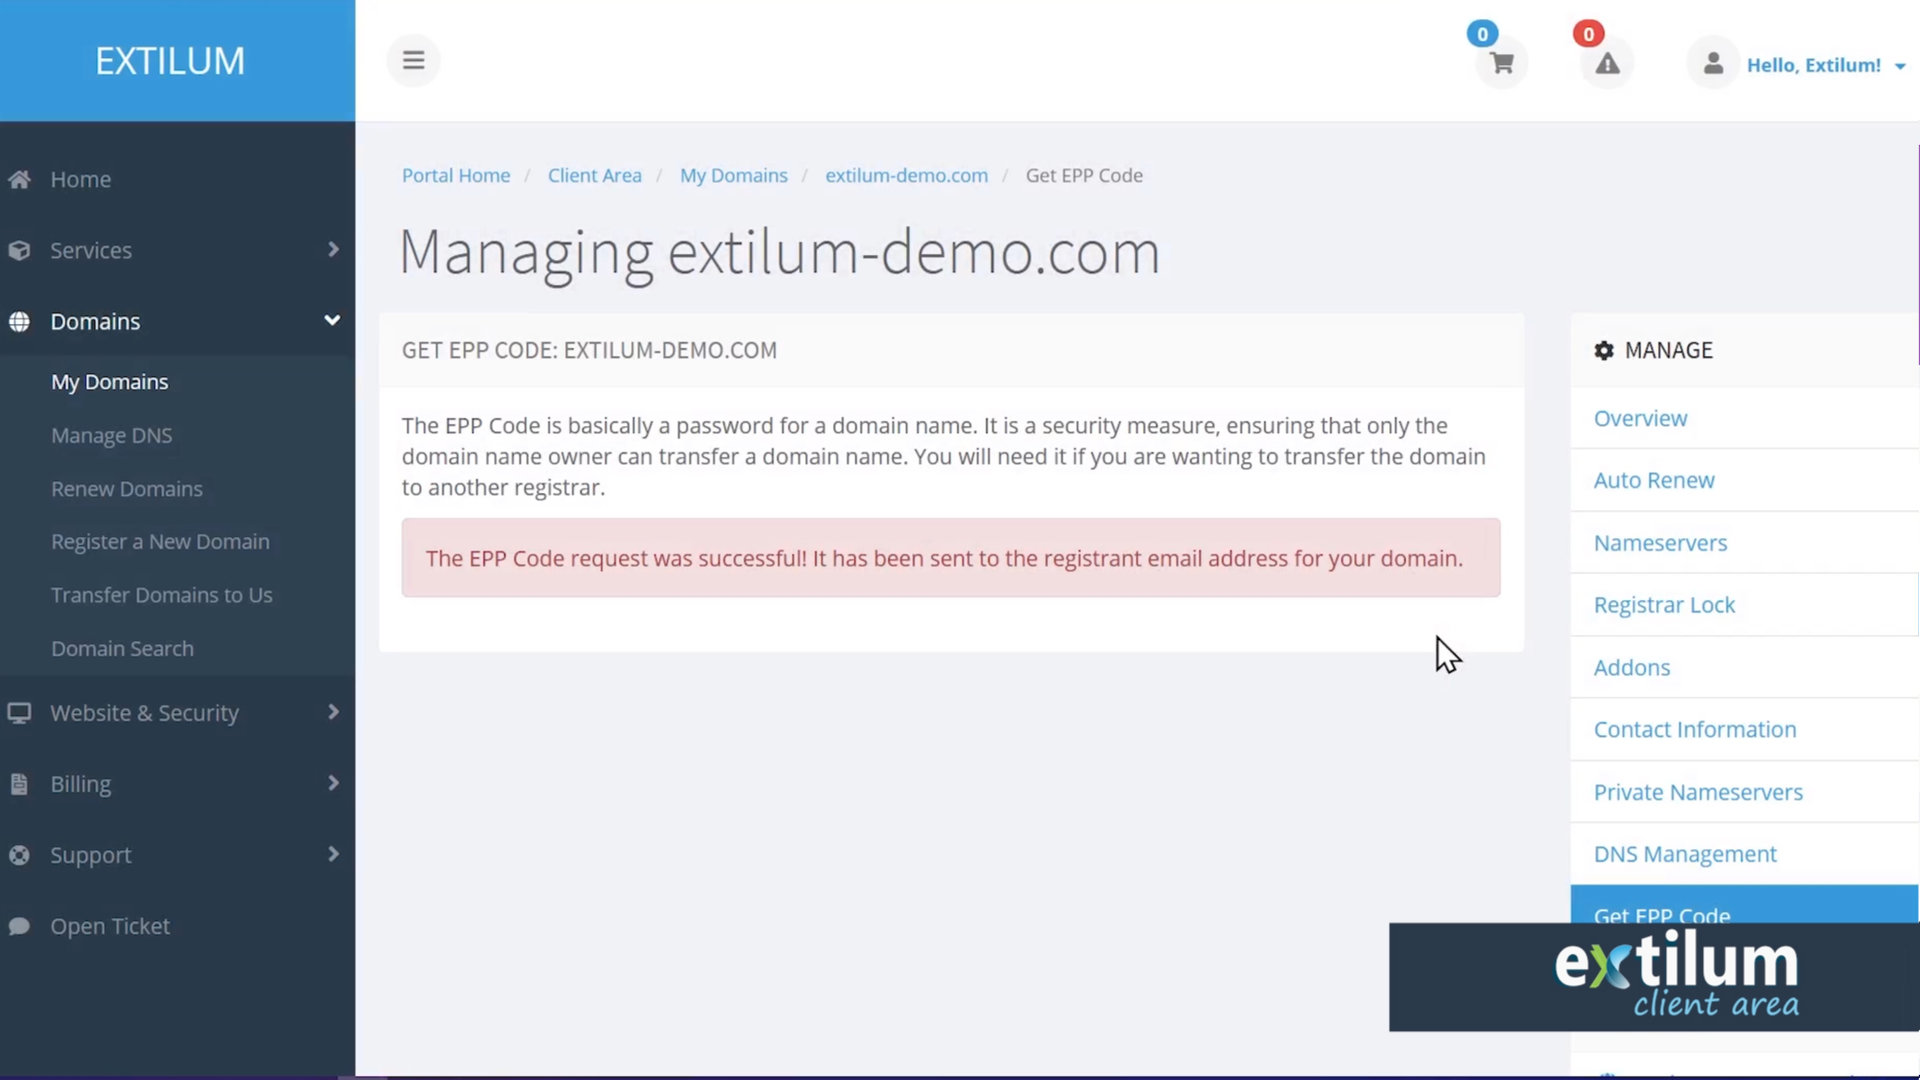 Extilum Client Area - Transfer Domain